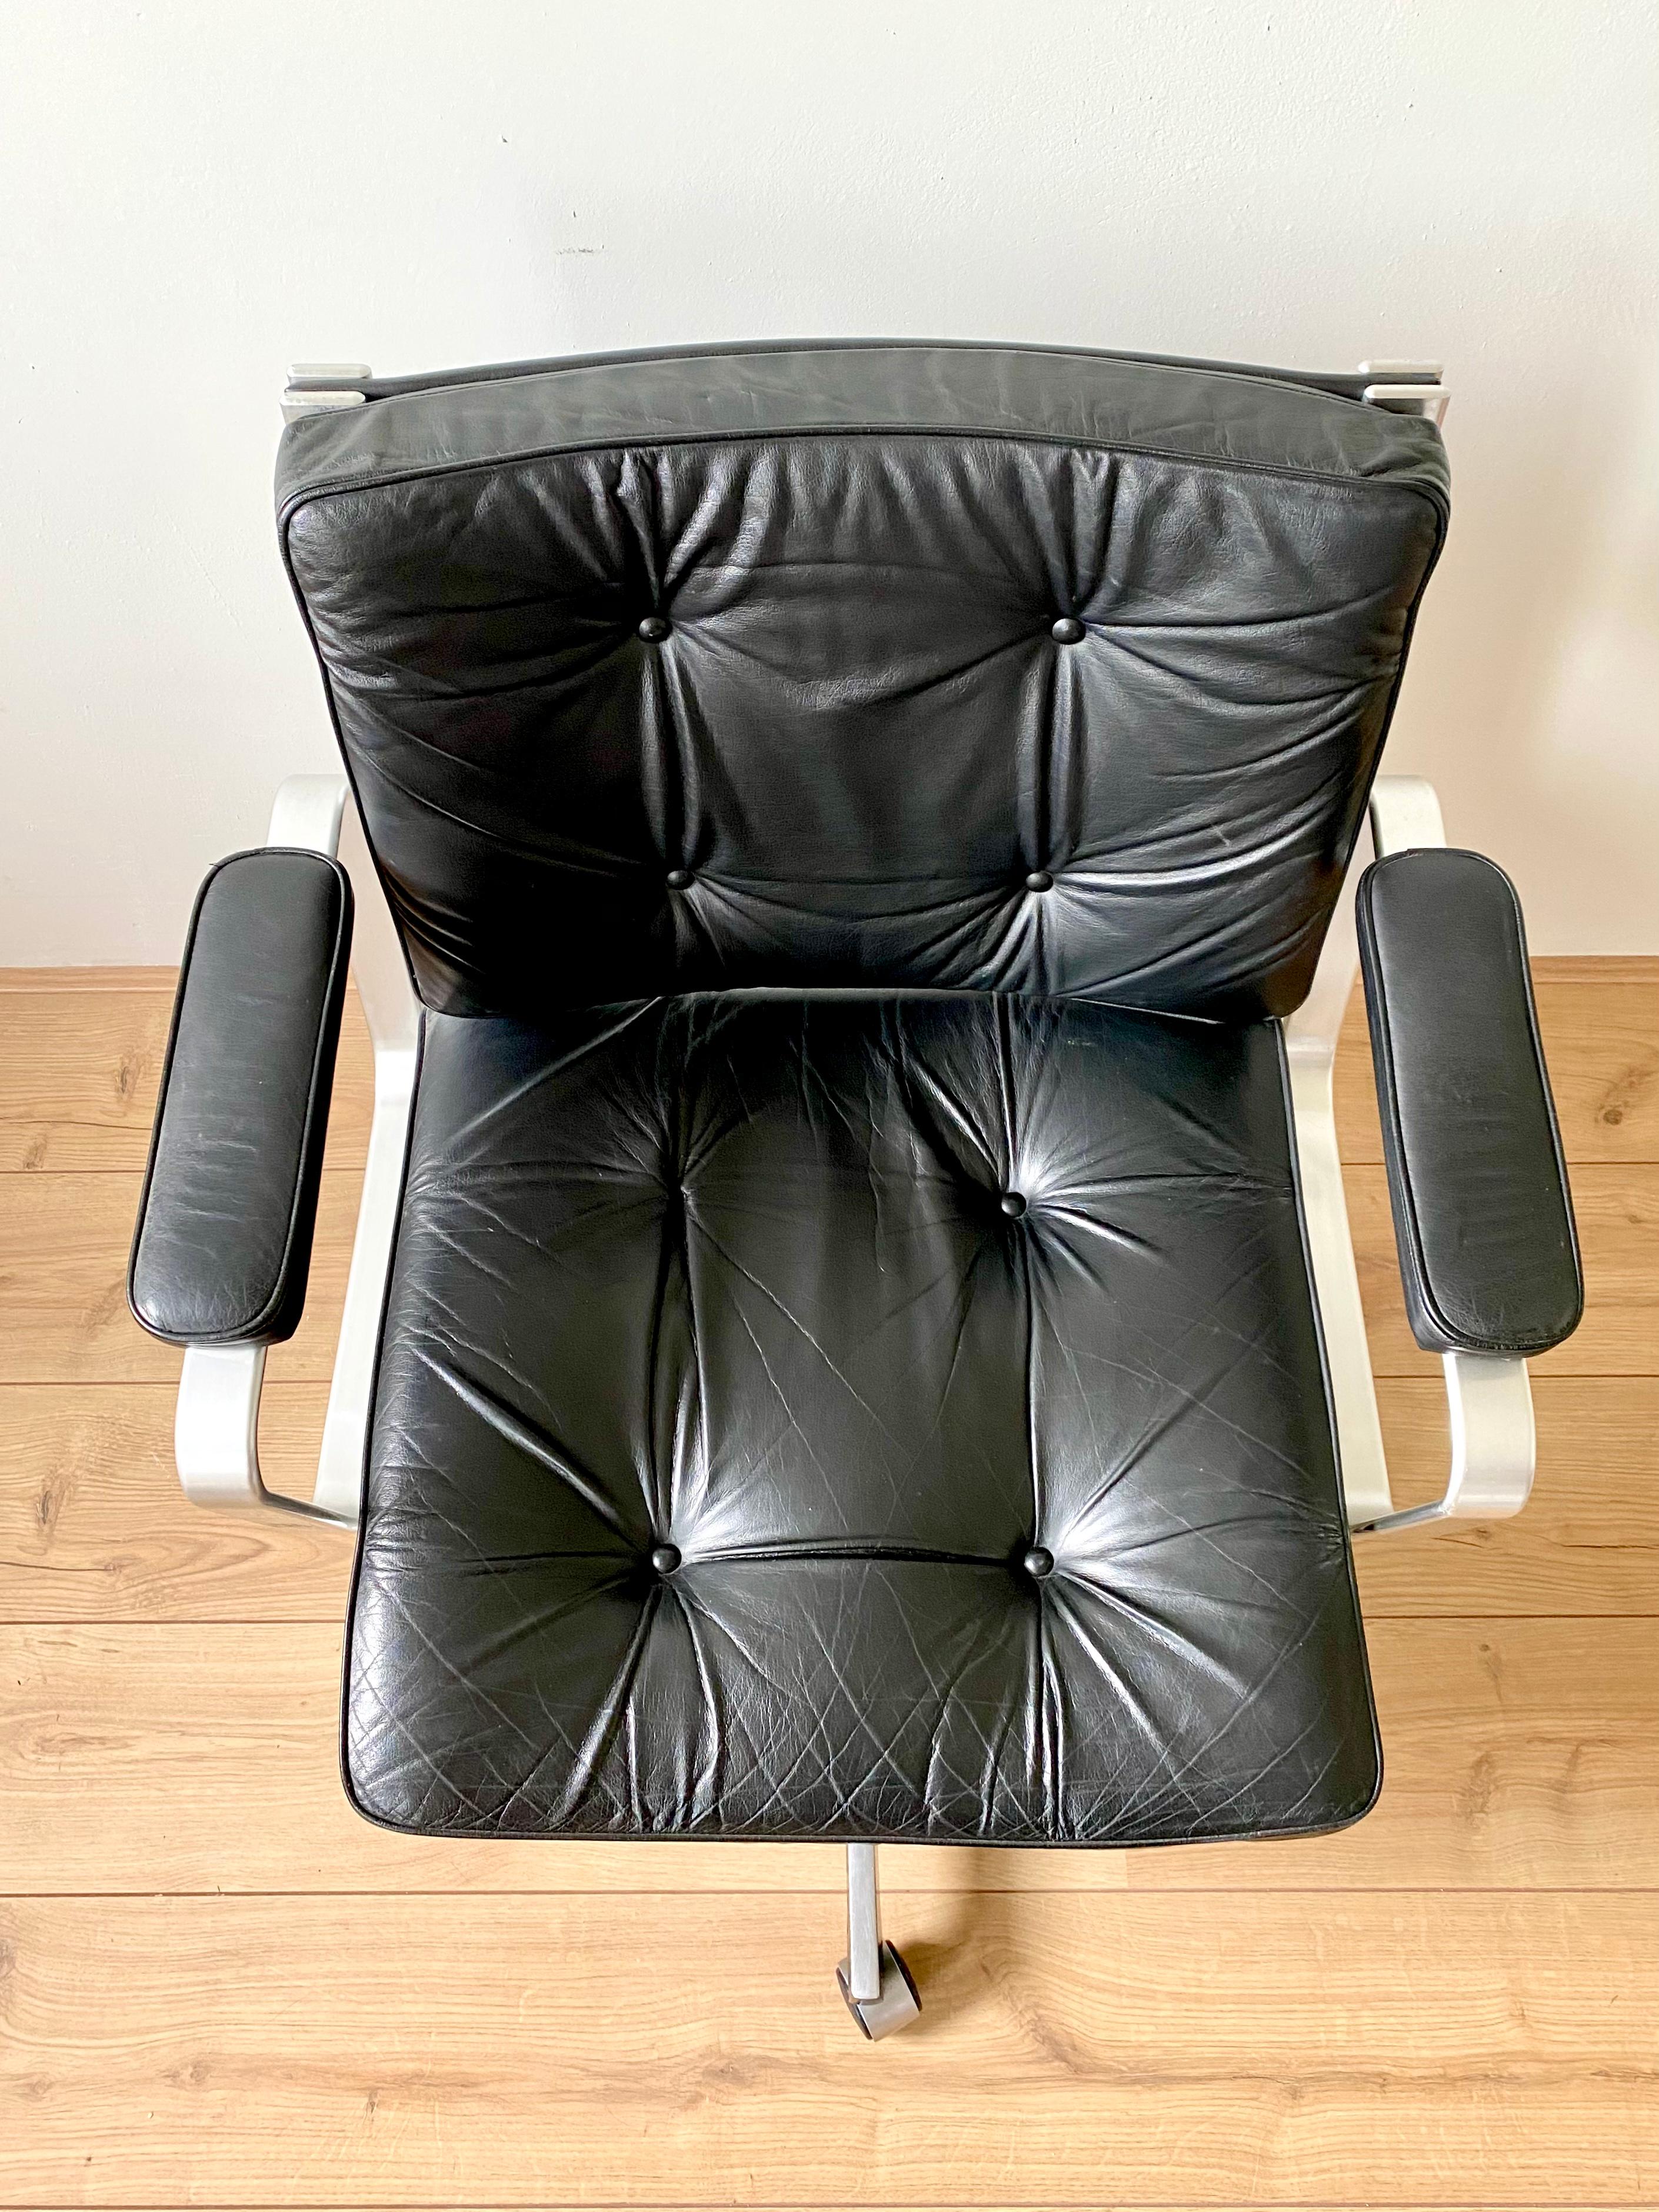 vintage mid century office chair